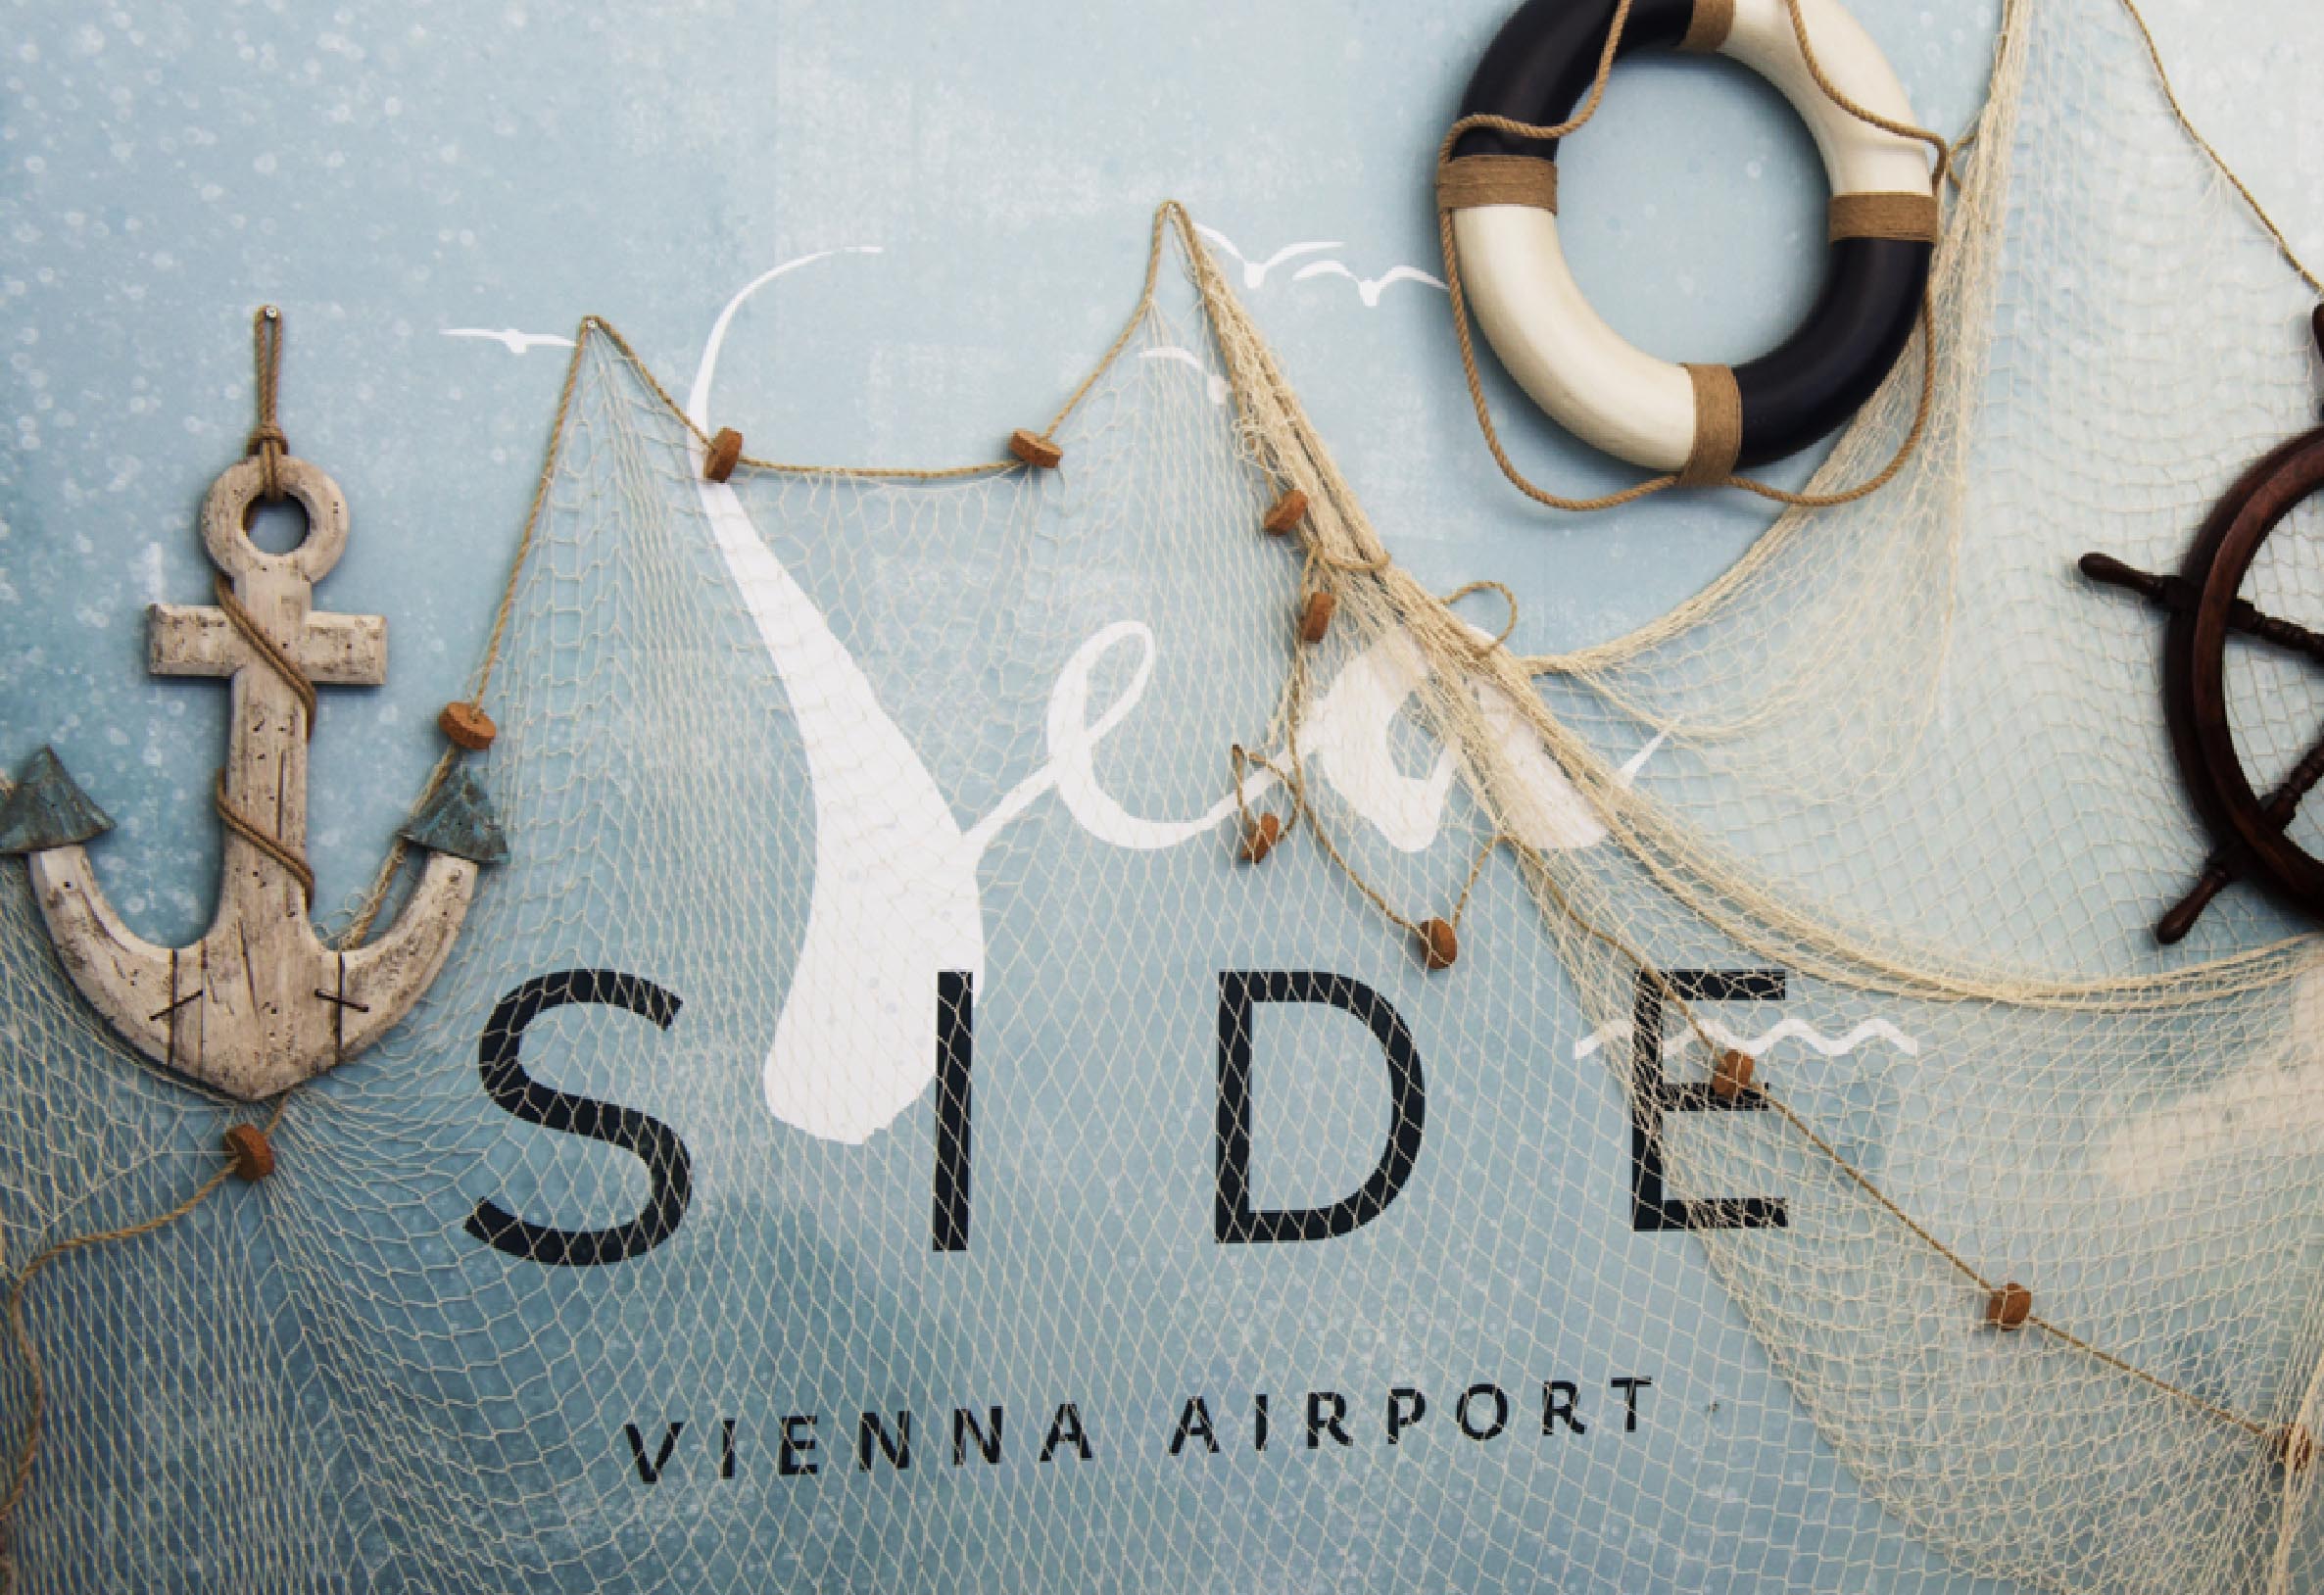 Sea Side Vienna Airport